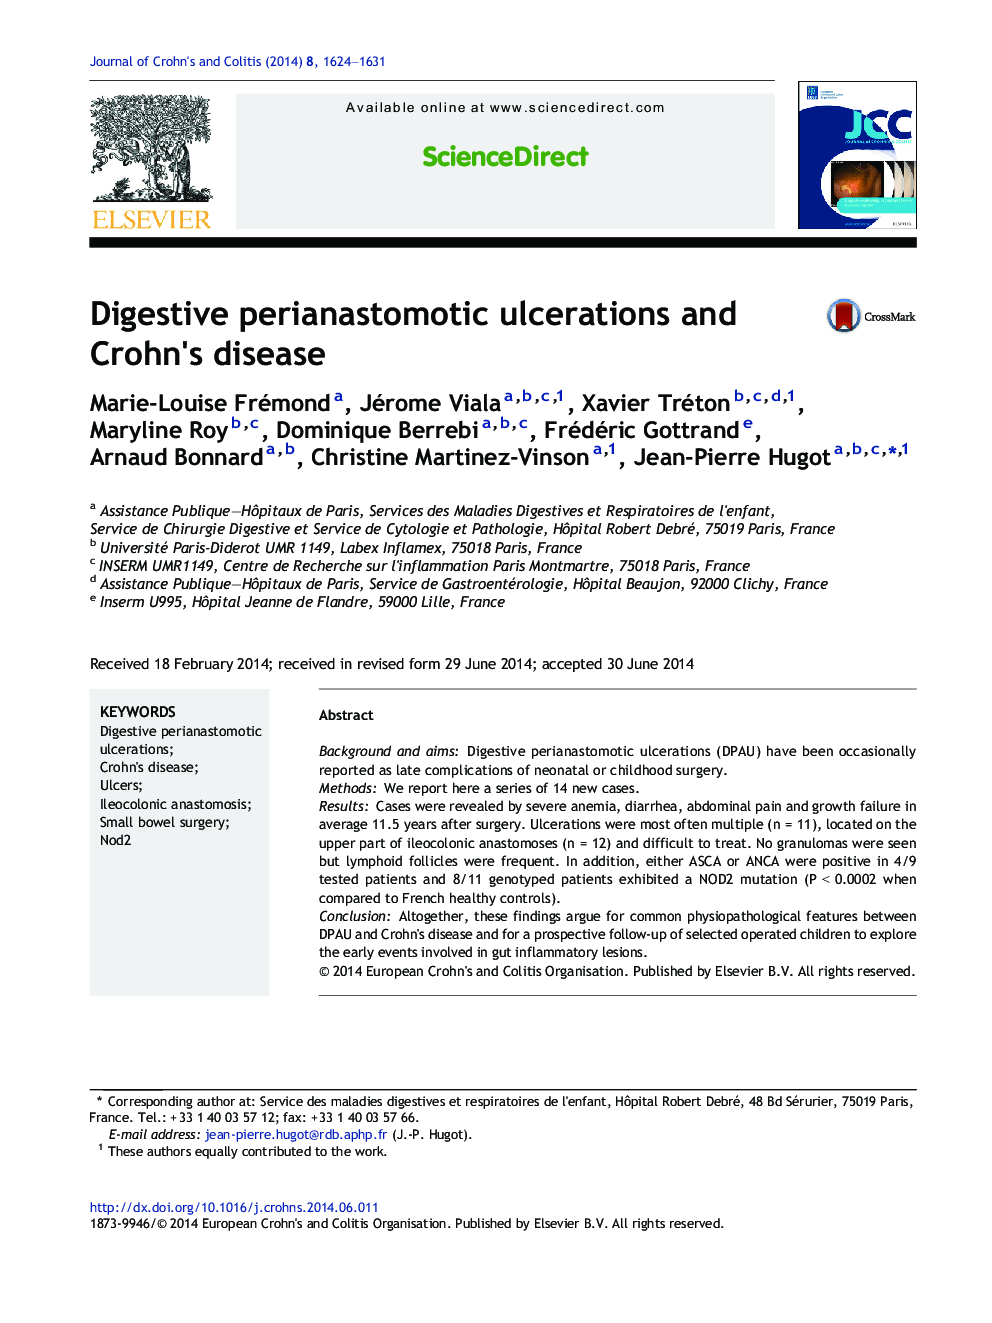 Digestive perianastomotic ulcerations and Crohn's disease